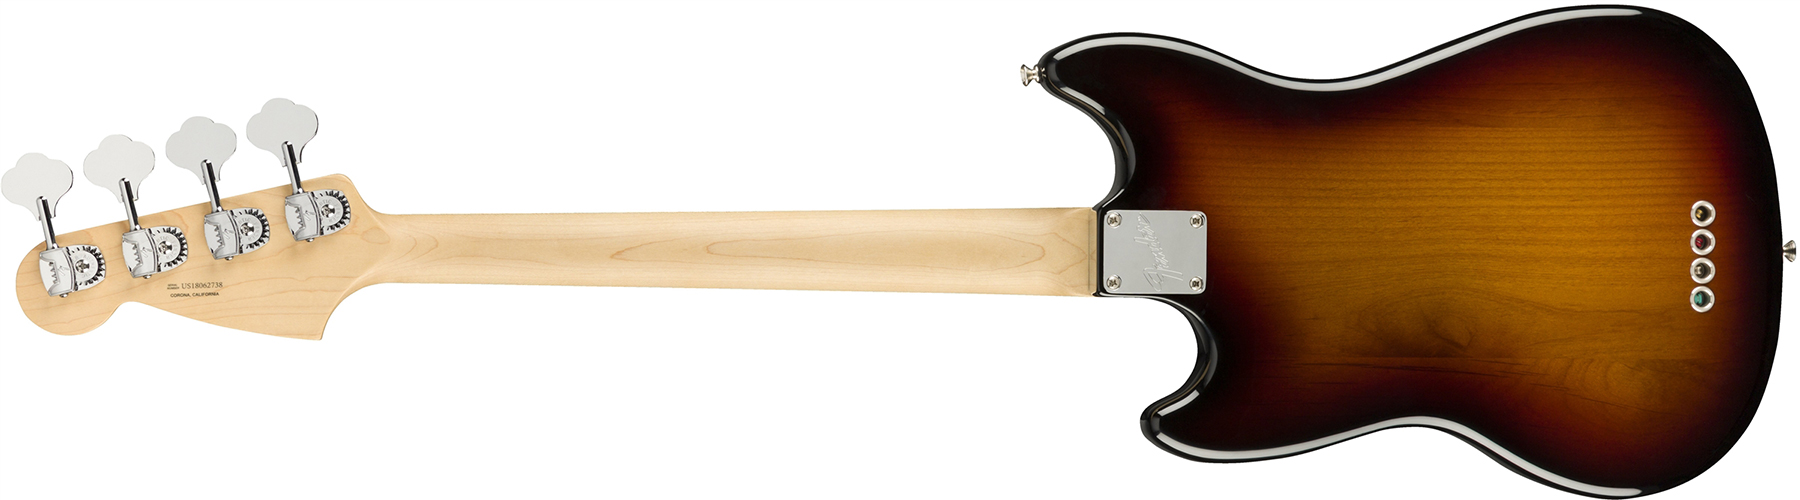 Fender Mustang Bass American Performer Usa Rw - 3-color Sunburst - Short scale elektrische bas - Variation 1